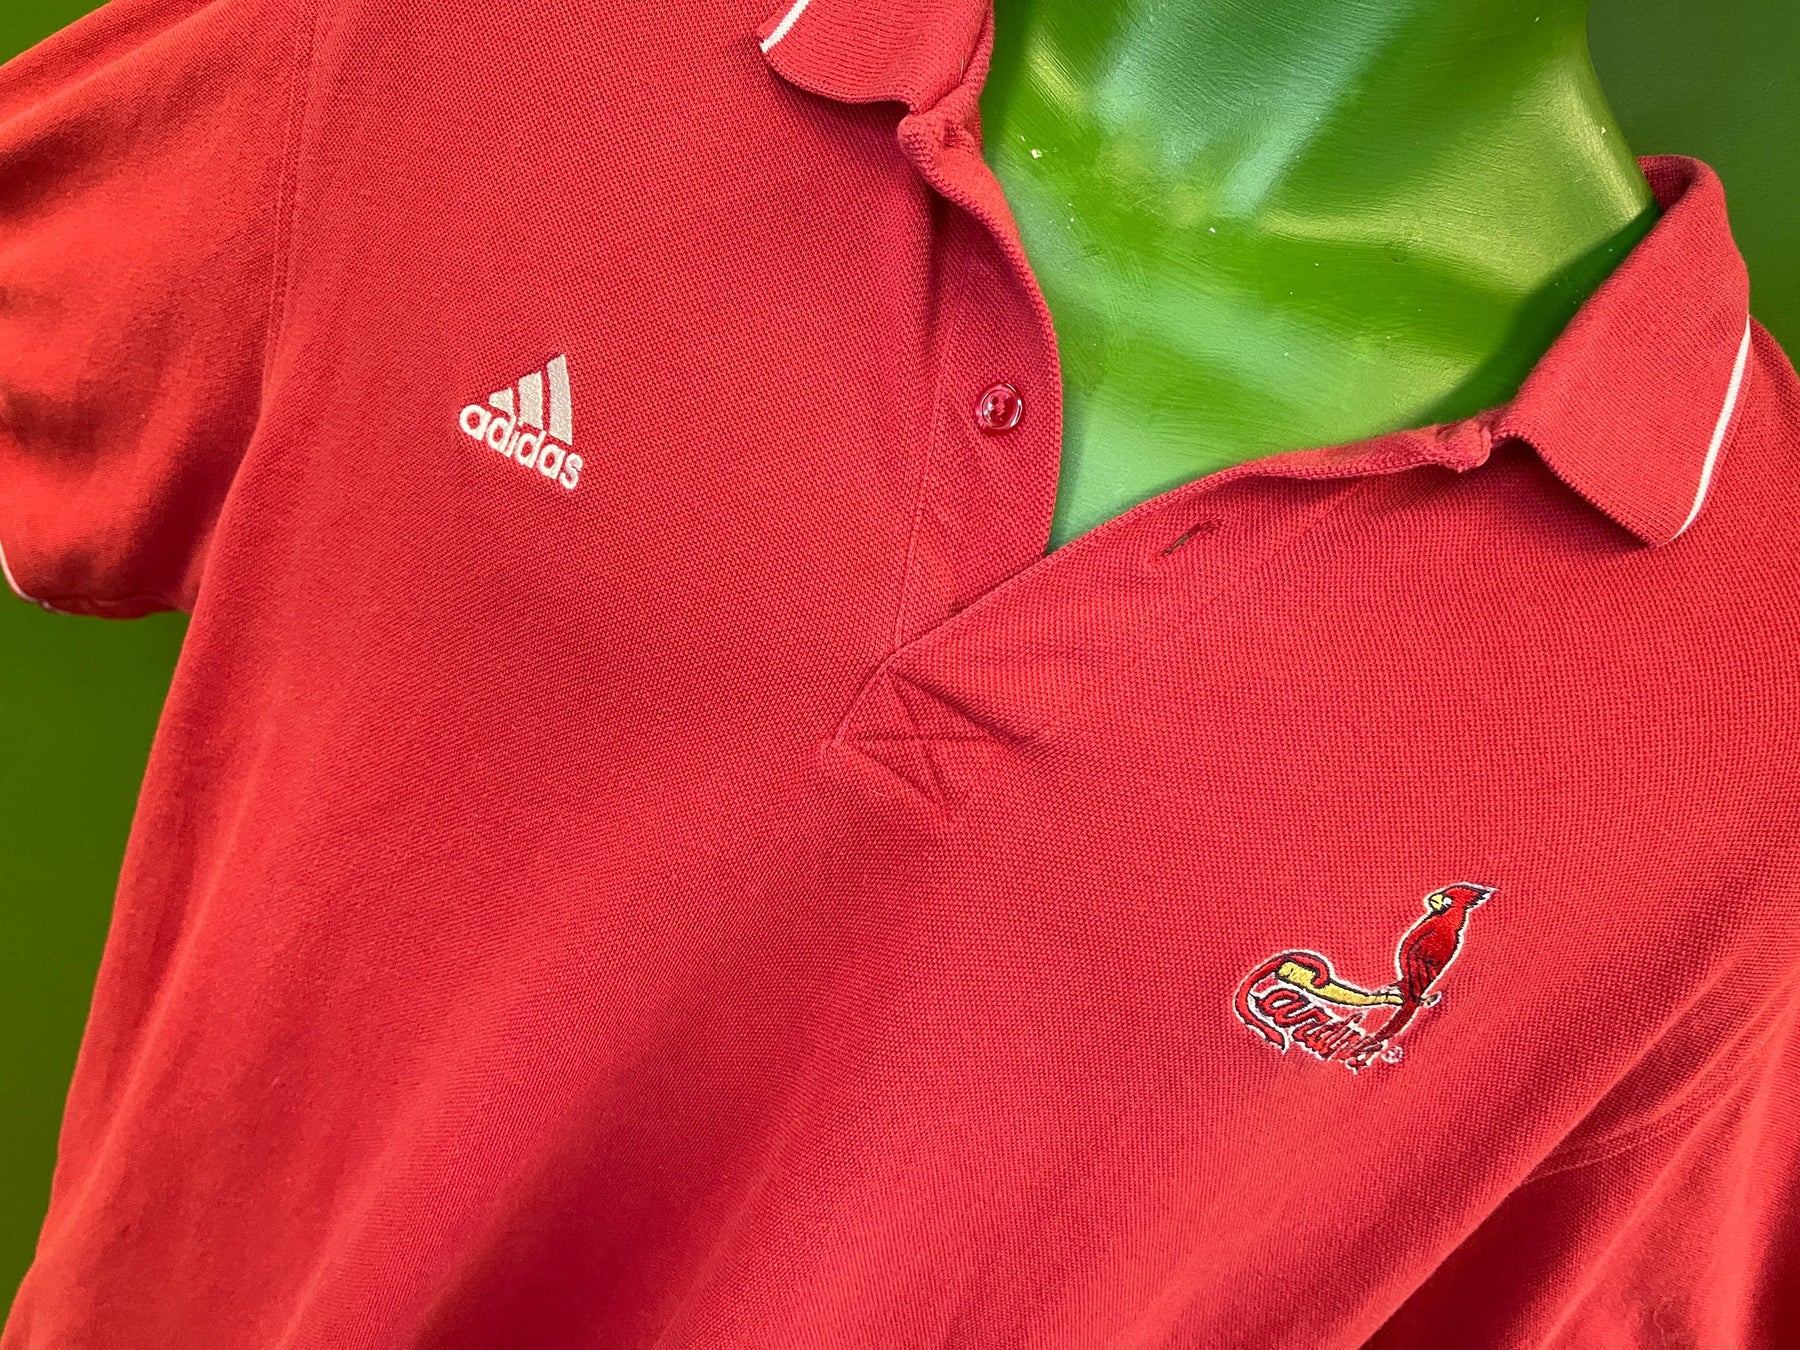 MLB St. Louis Cardinals Red Golf Polo Shirt Men's X-Large